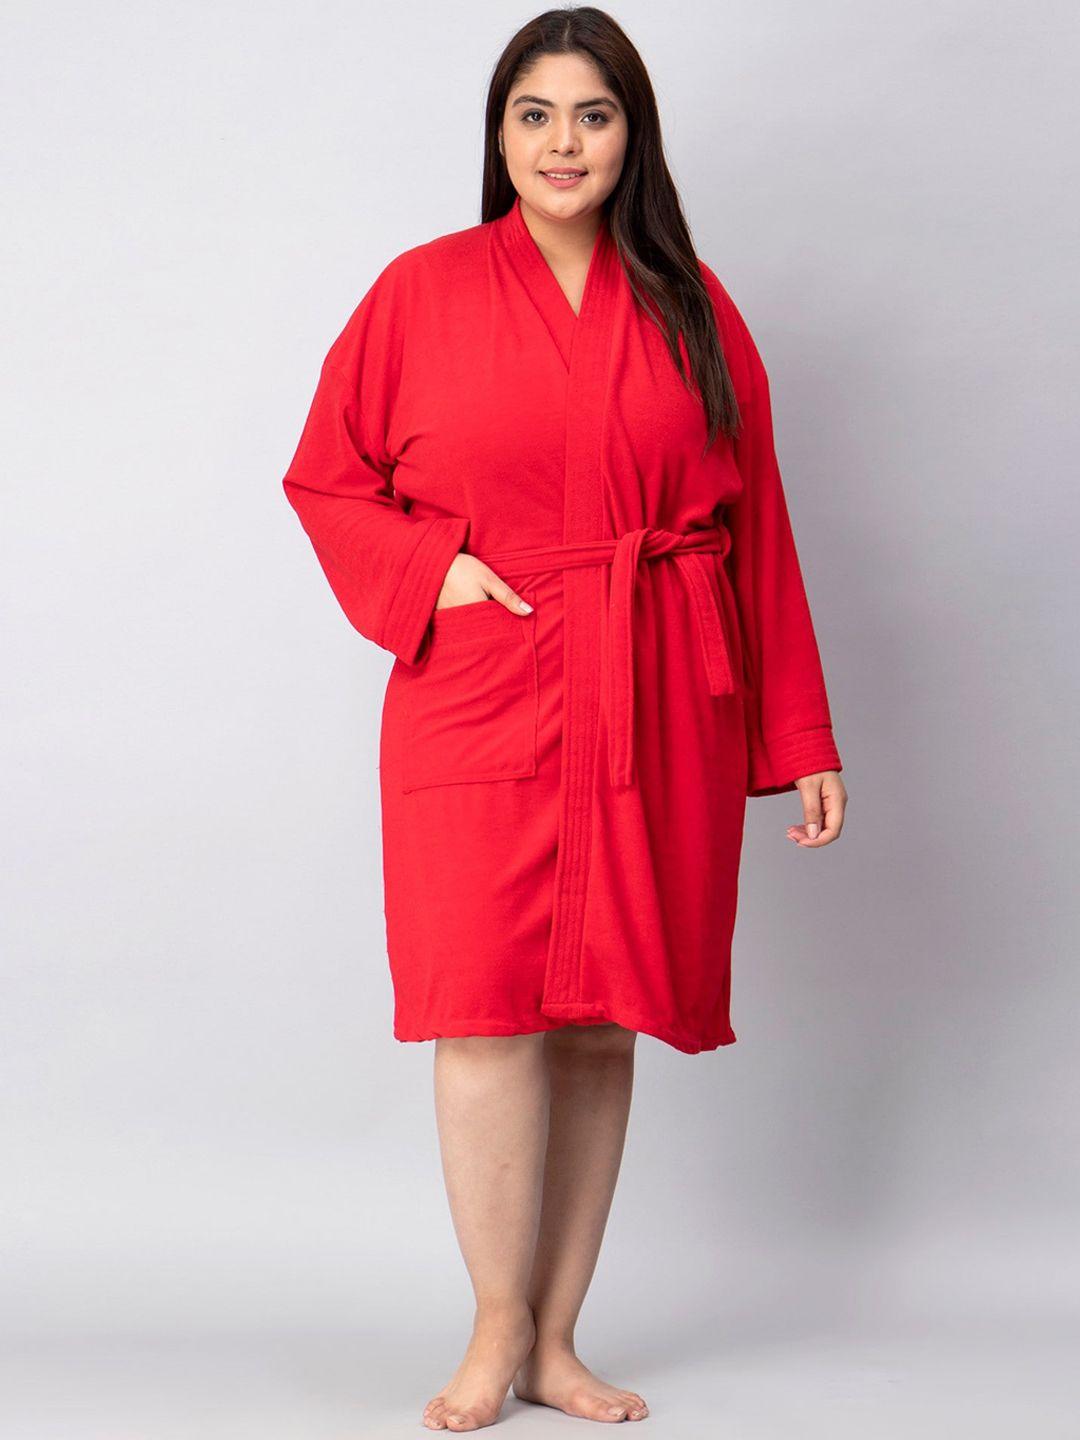 lacylook women plus size red bath robe